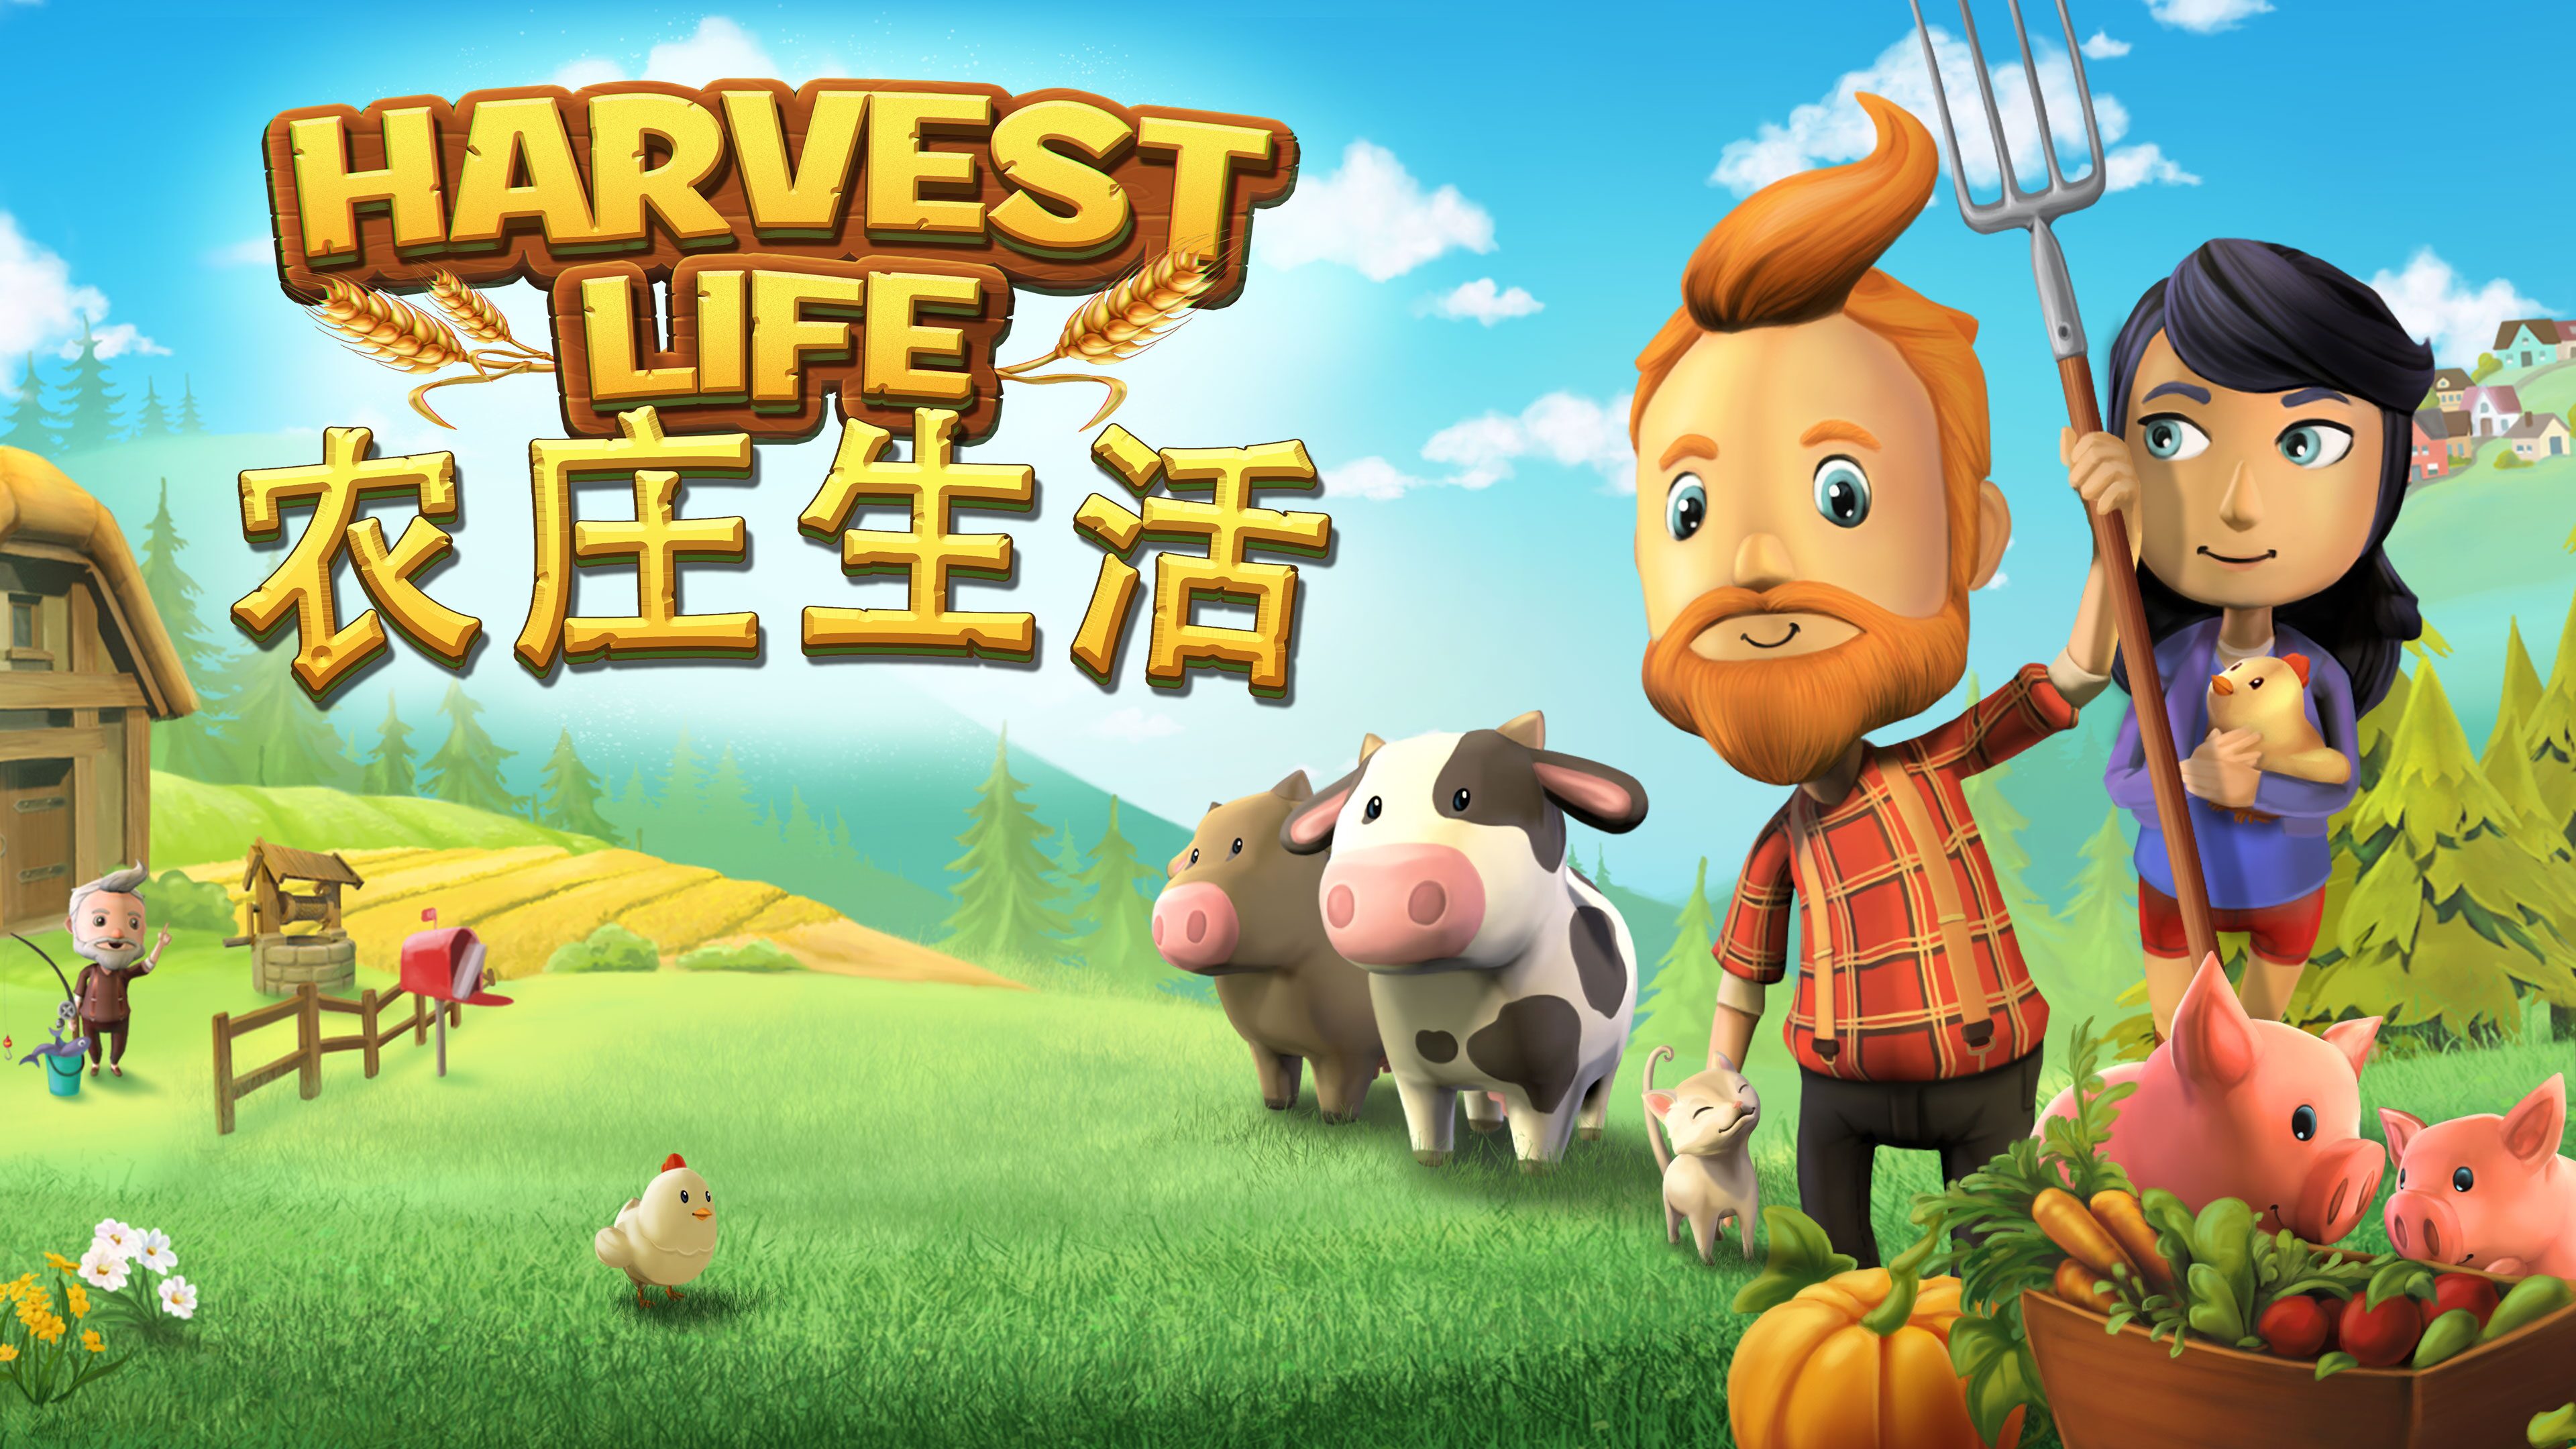 Harvest Life - 农庄生活 (日语, 简体中文, 繁体中文, 英语)